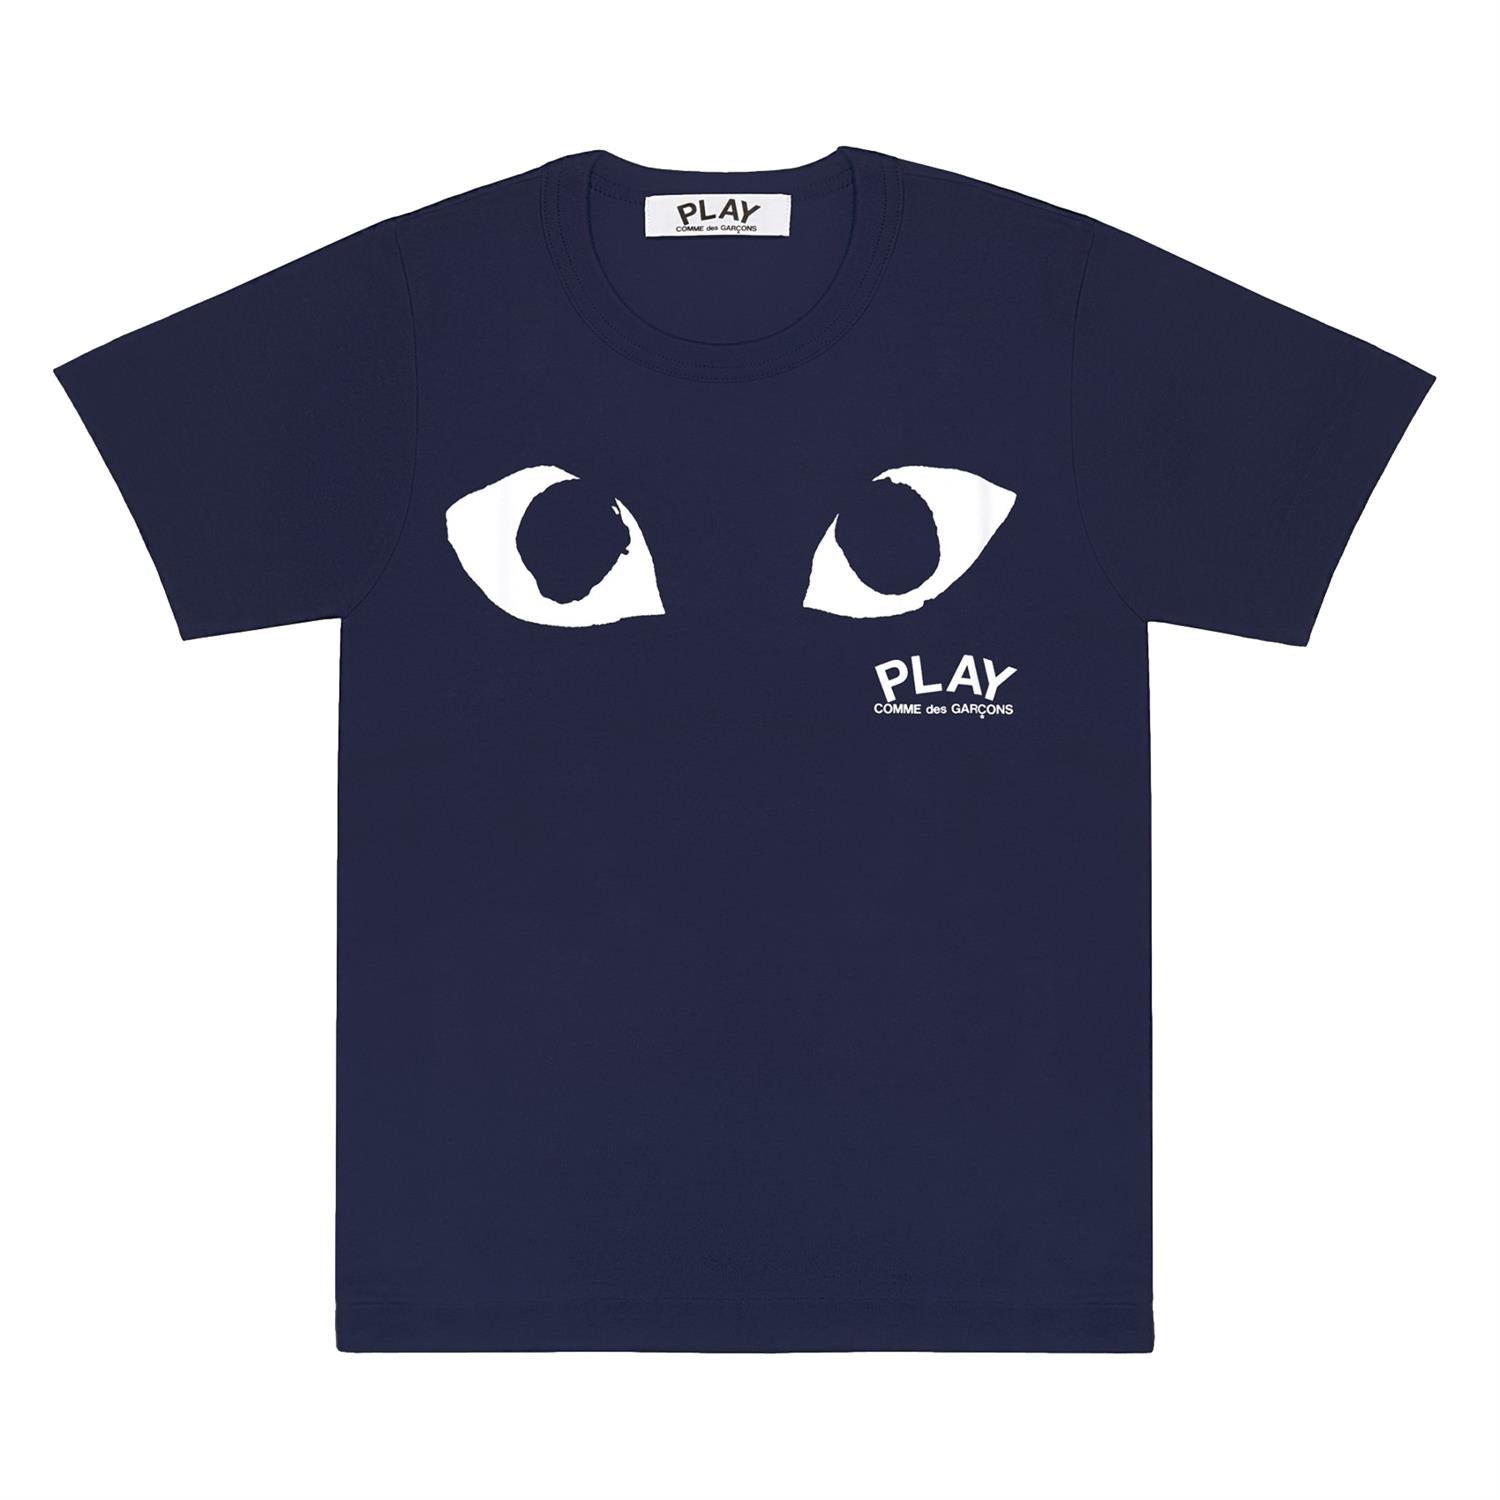 Comme des Garcons Play T-Shirt Men's Big Eyes T-shirt Navy - [modostore.no]